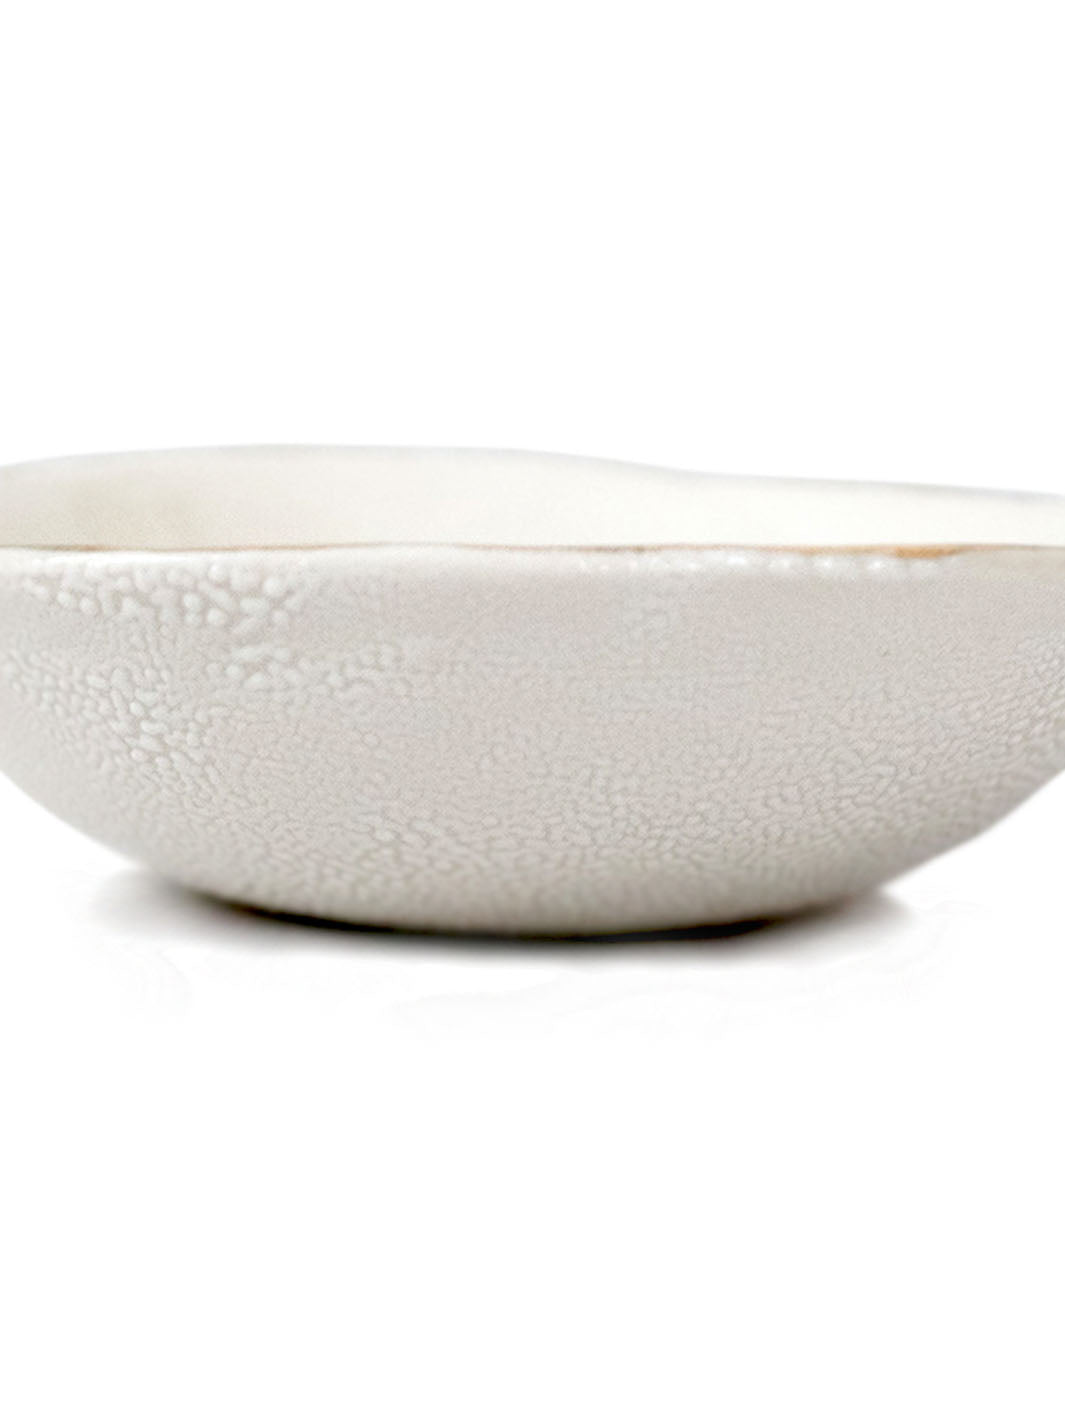 Gold Rim White Porcelain Bowl Earthly Comfort Home Decor 751-1